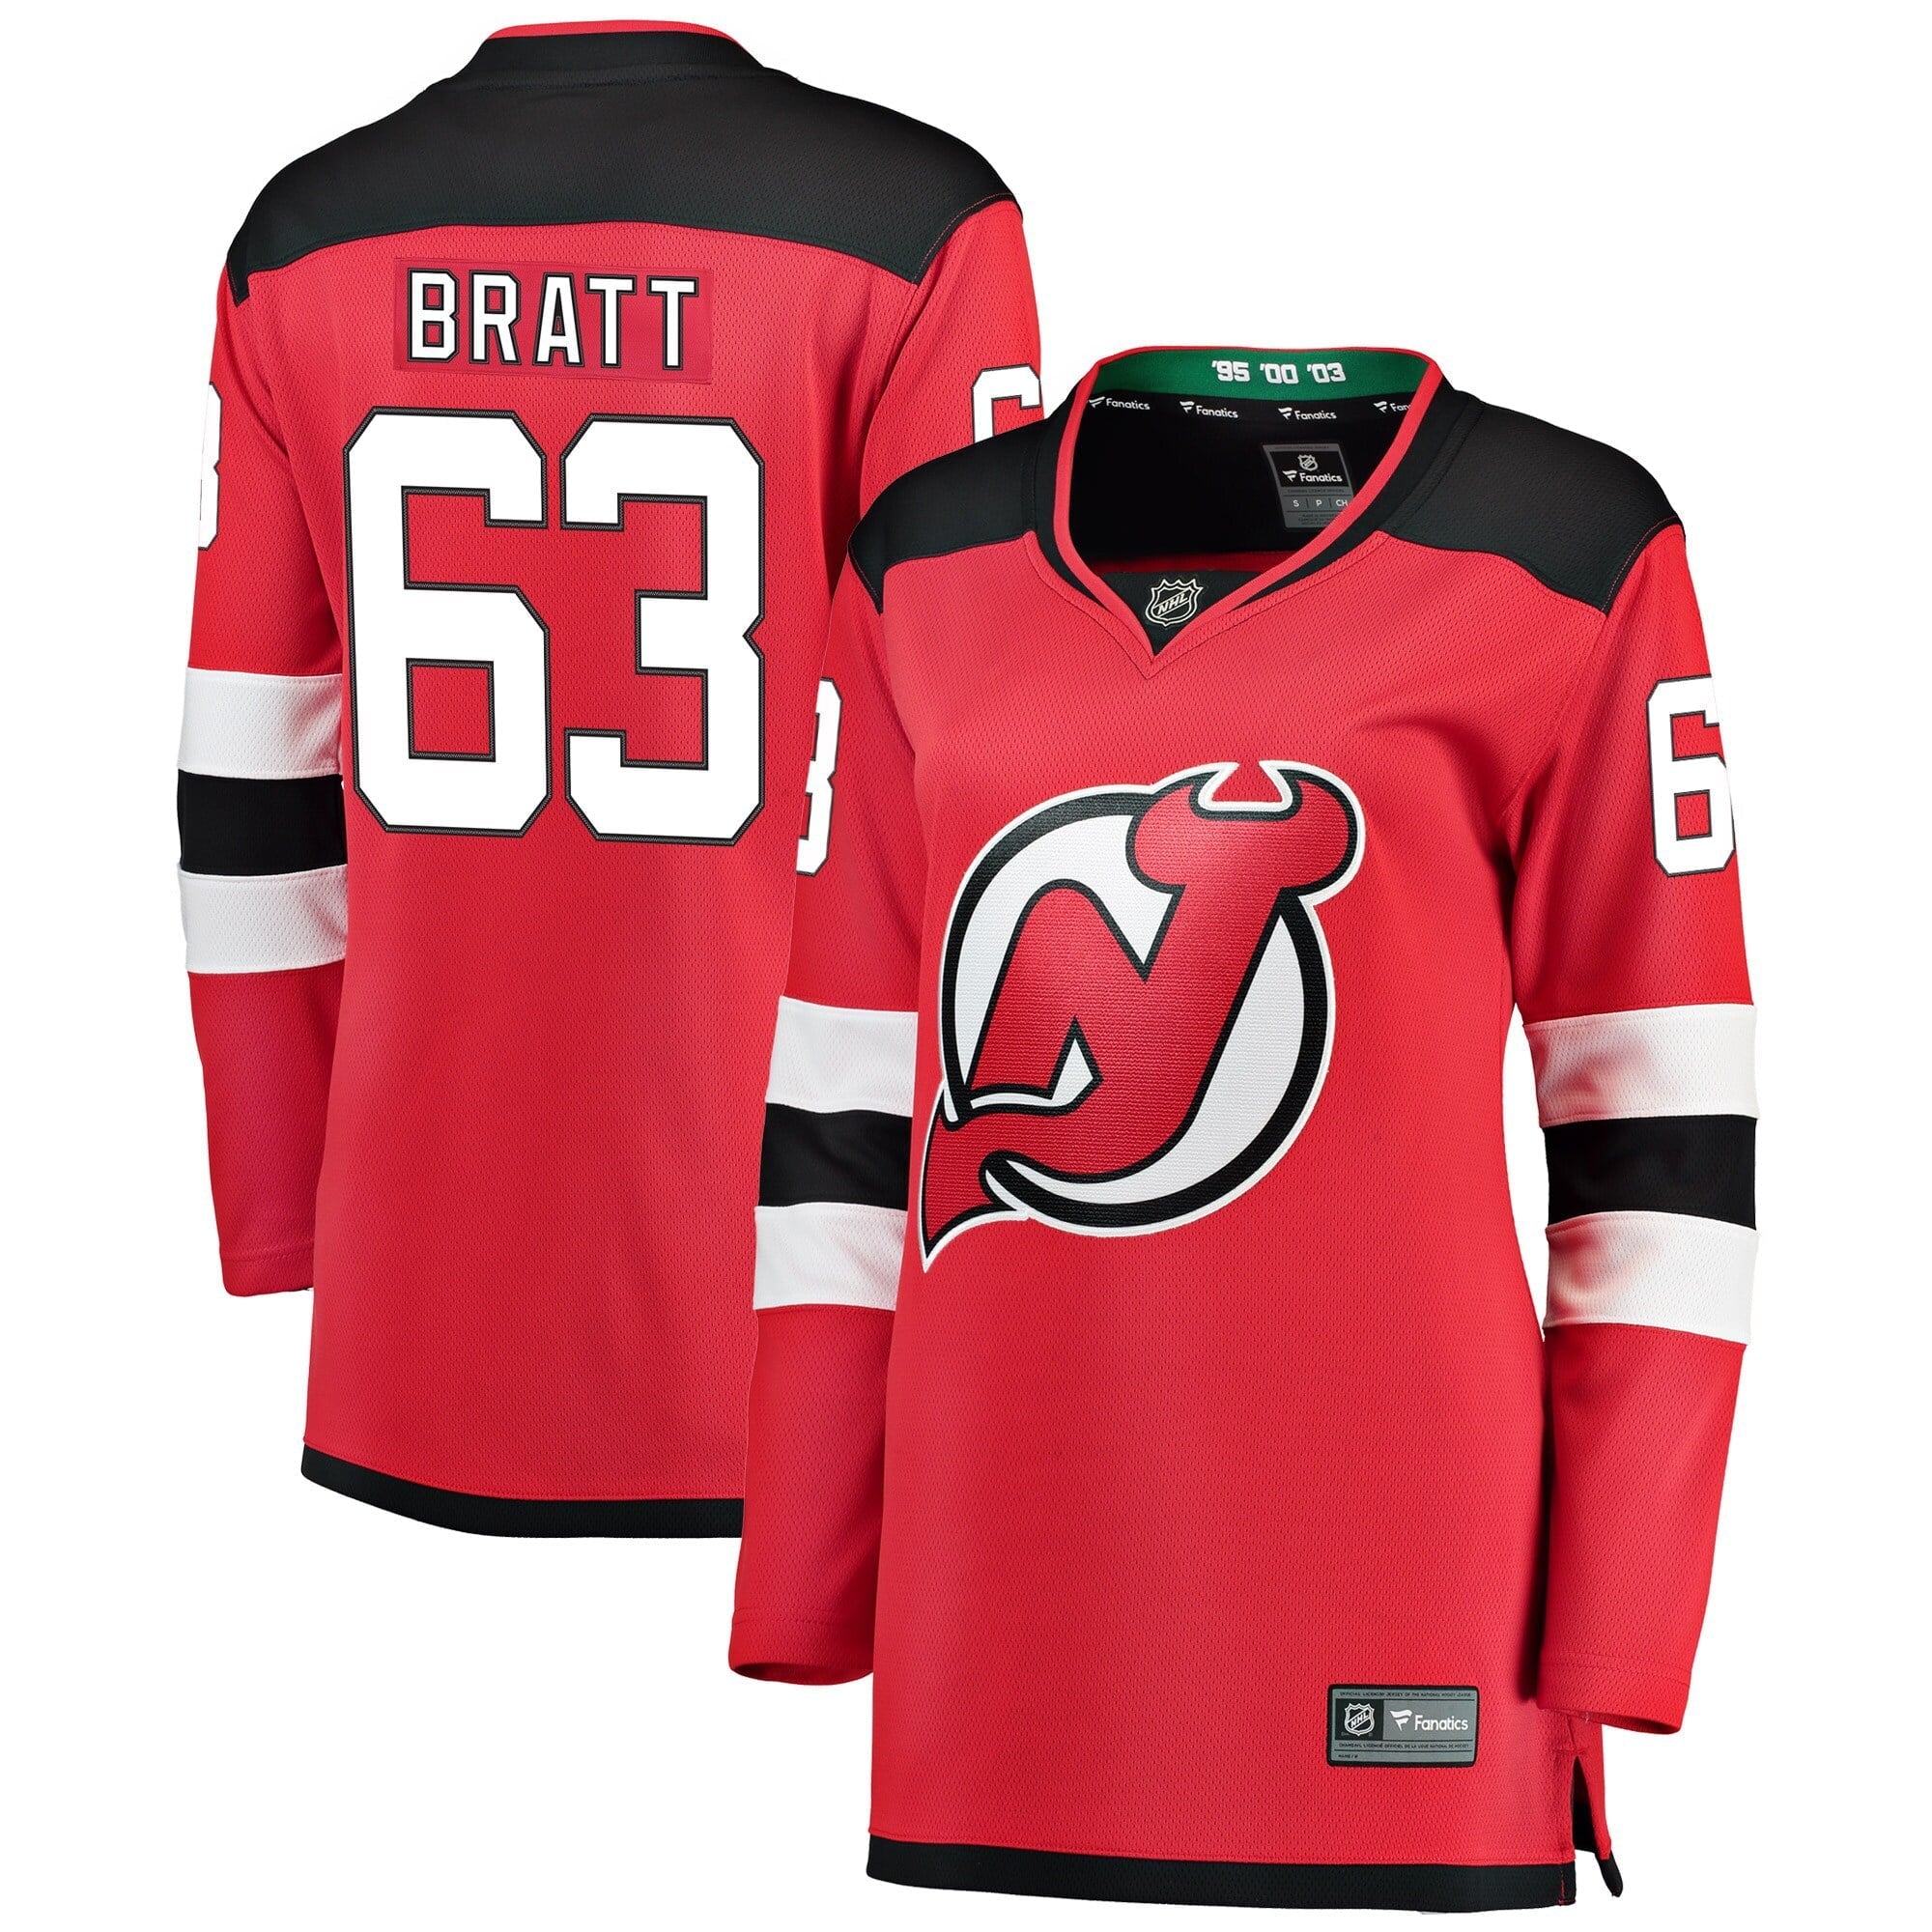 New Jersey Devils: Jesper Bratt Was Never Available